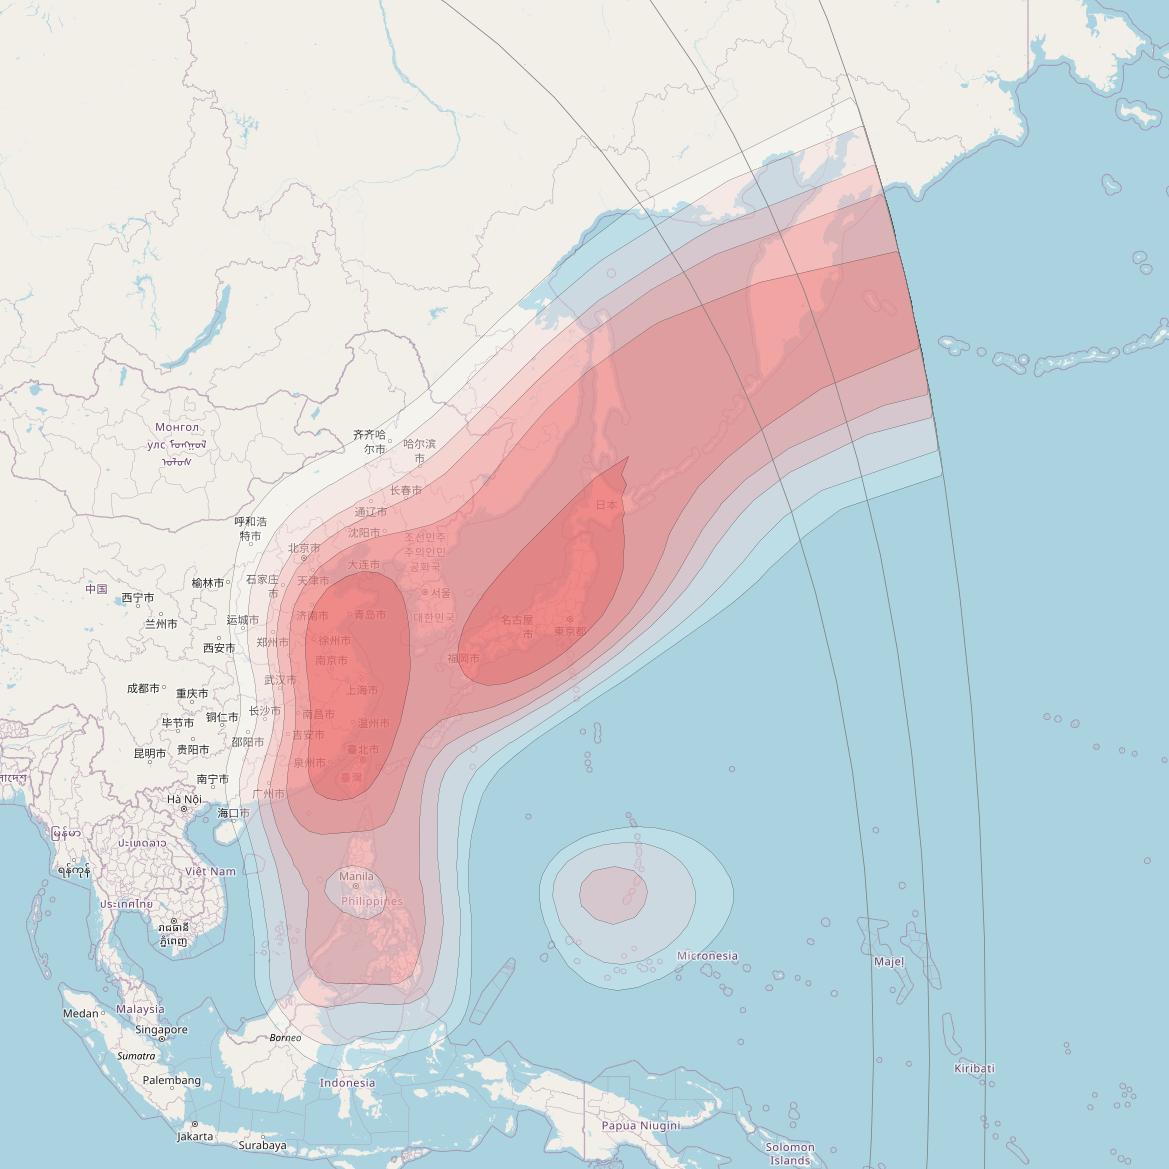 SES 12 at 95° E downlink Ku-band North East Asia beam coverage map